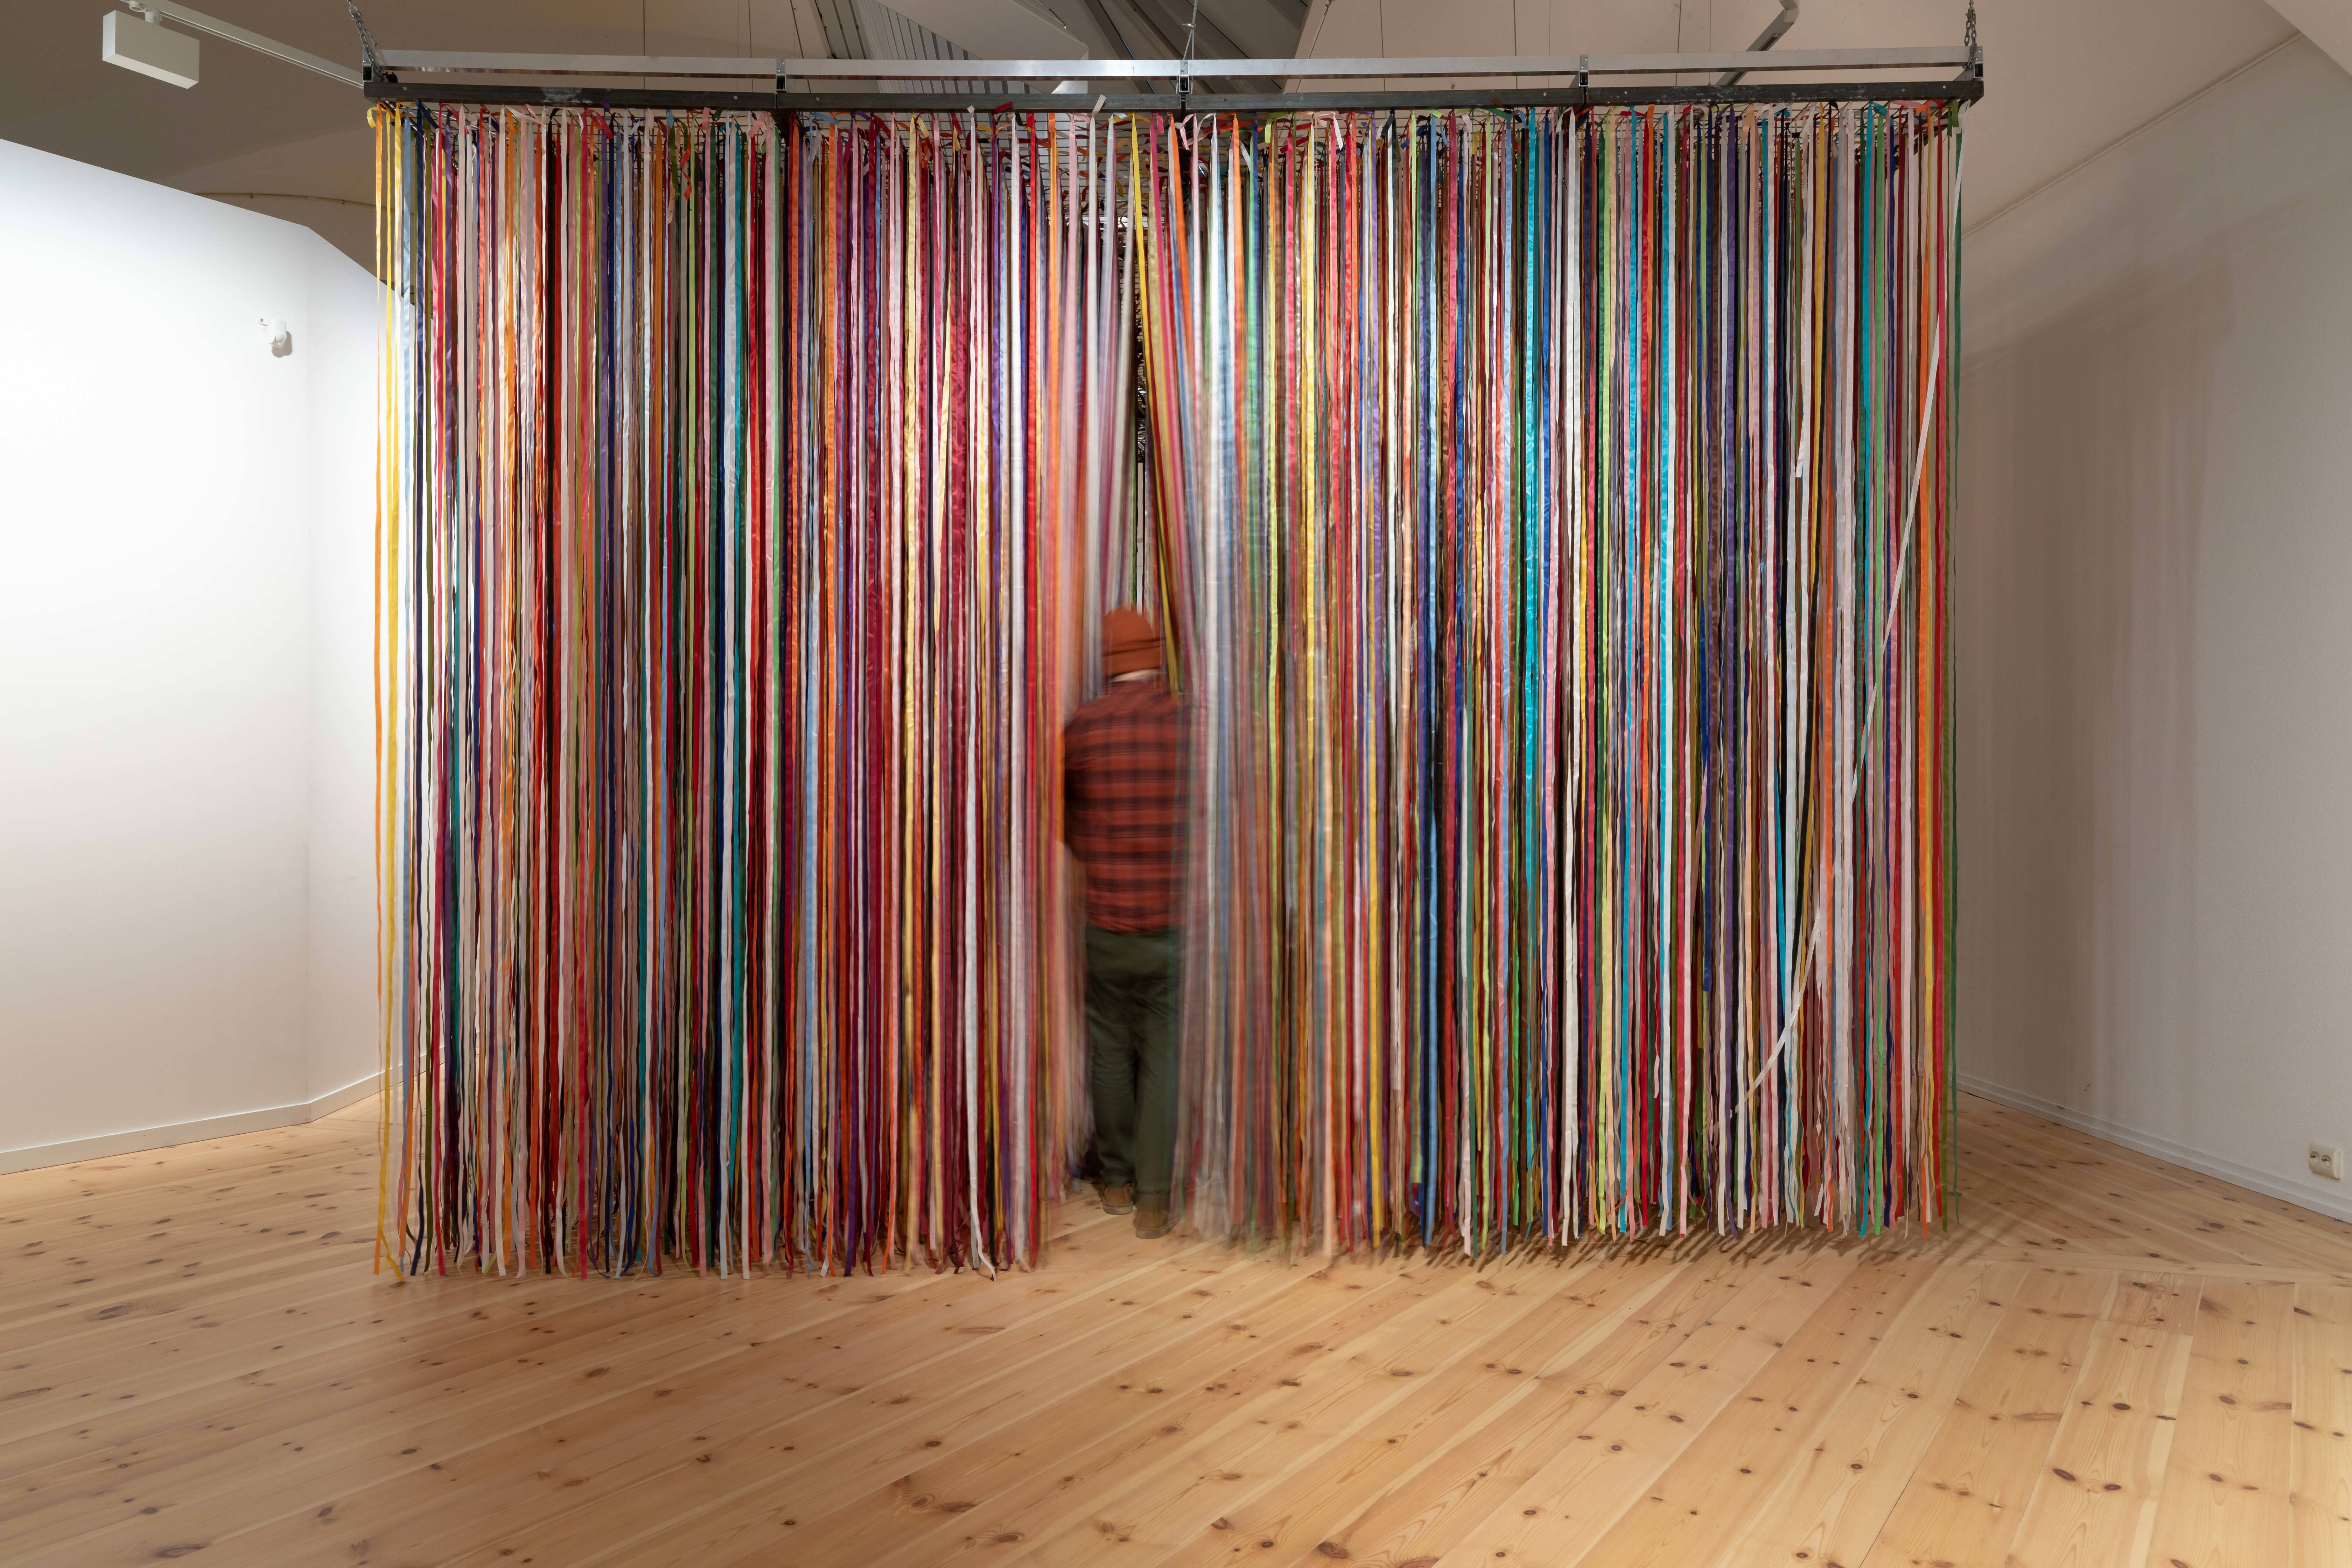 Jacob-Dahlgren-The-wonderful-world-of-abstraction-2012-Foto-Oddbjørn-Erland-Aarstad-1.jpg#asset:11731